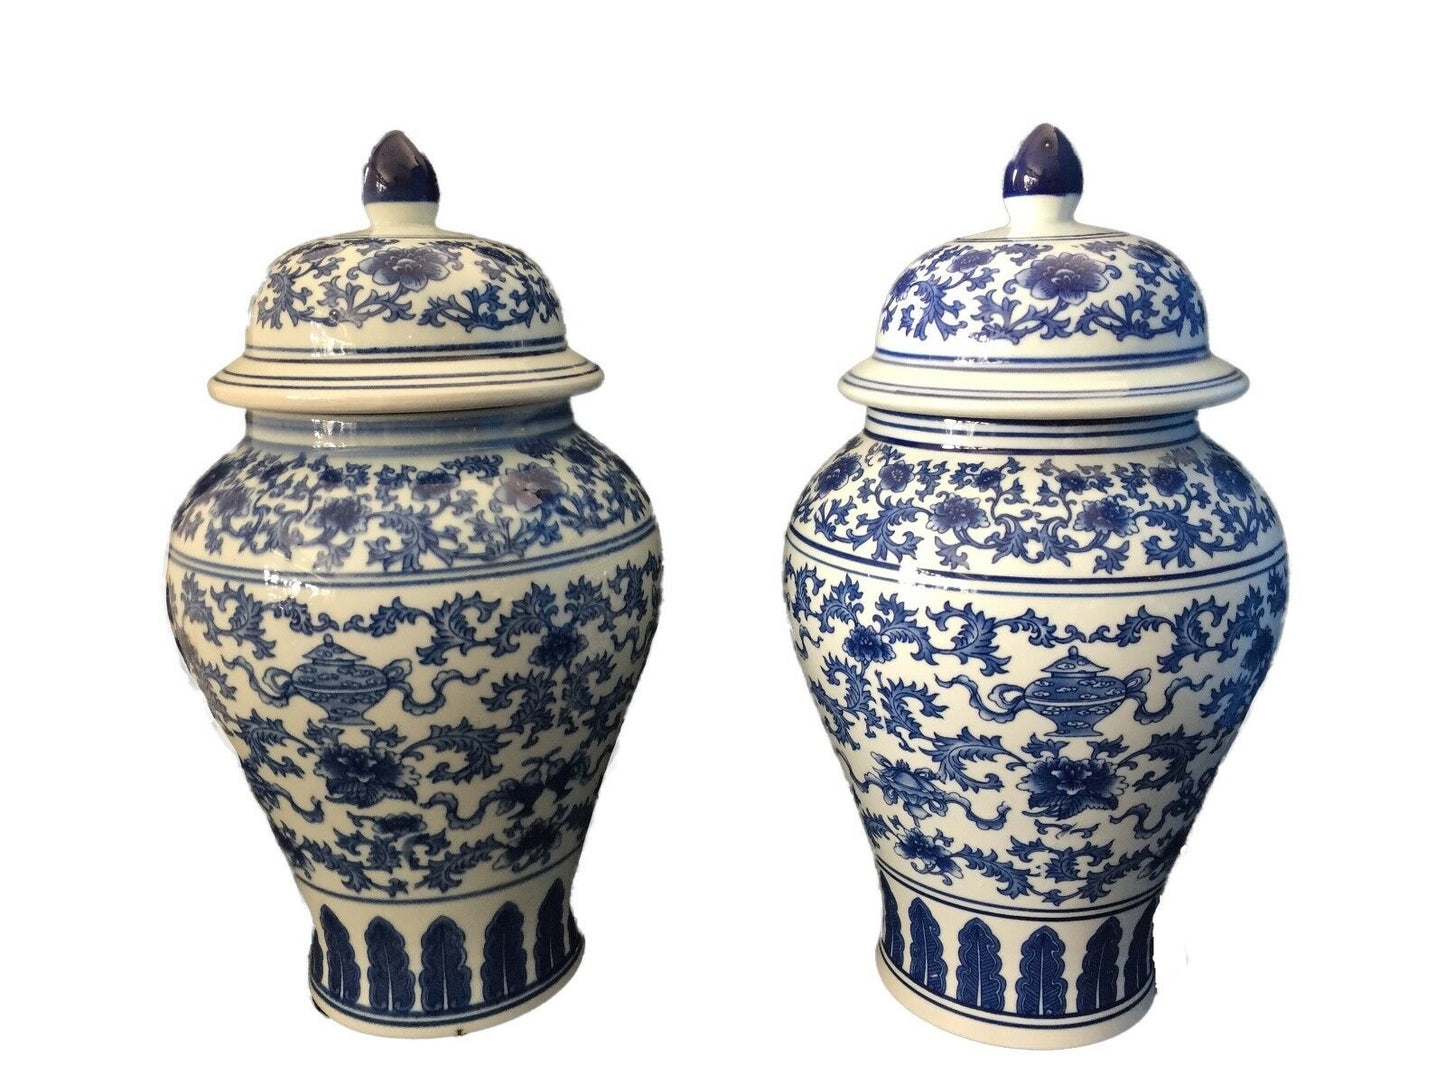 #864 Chinese Porcelain B & W Ginger Jars 14.5" h